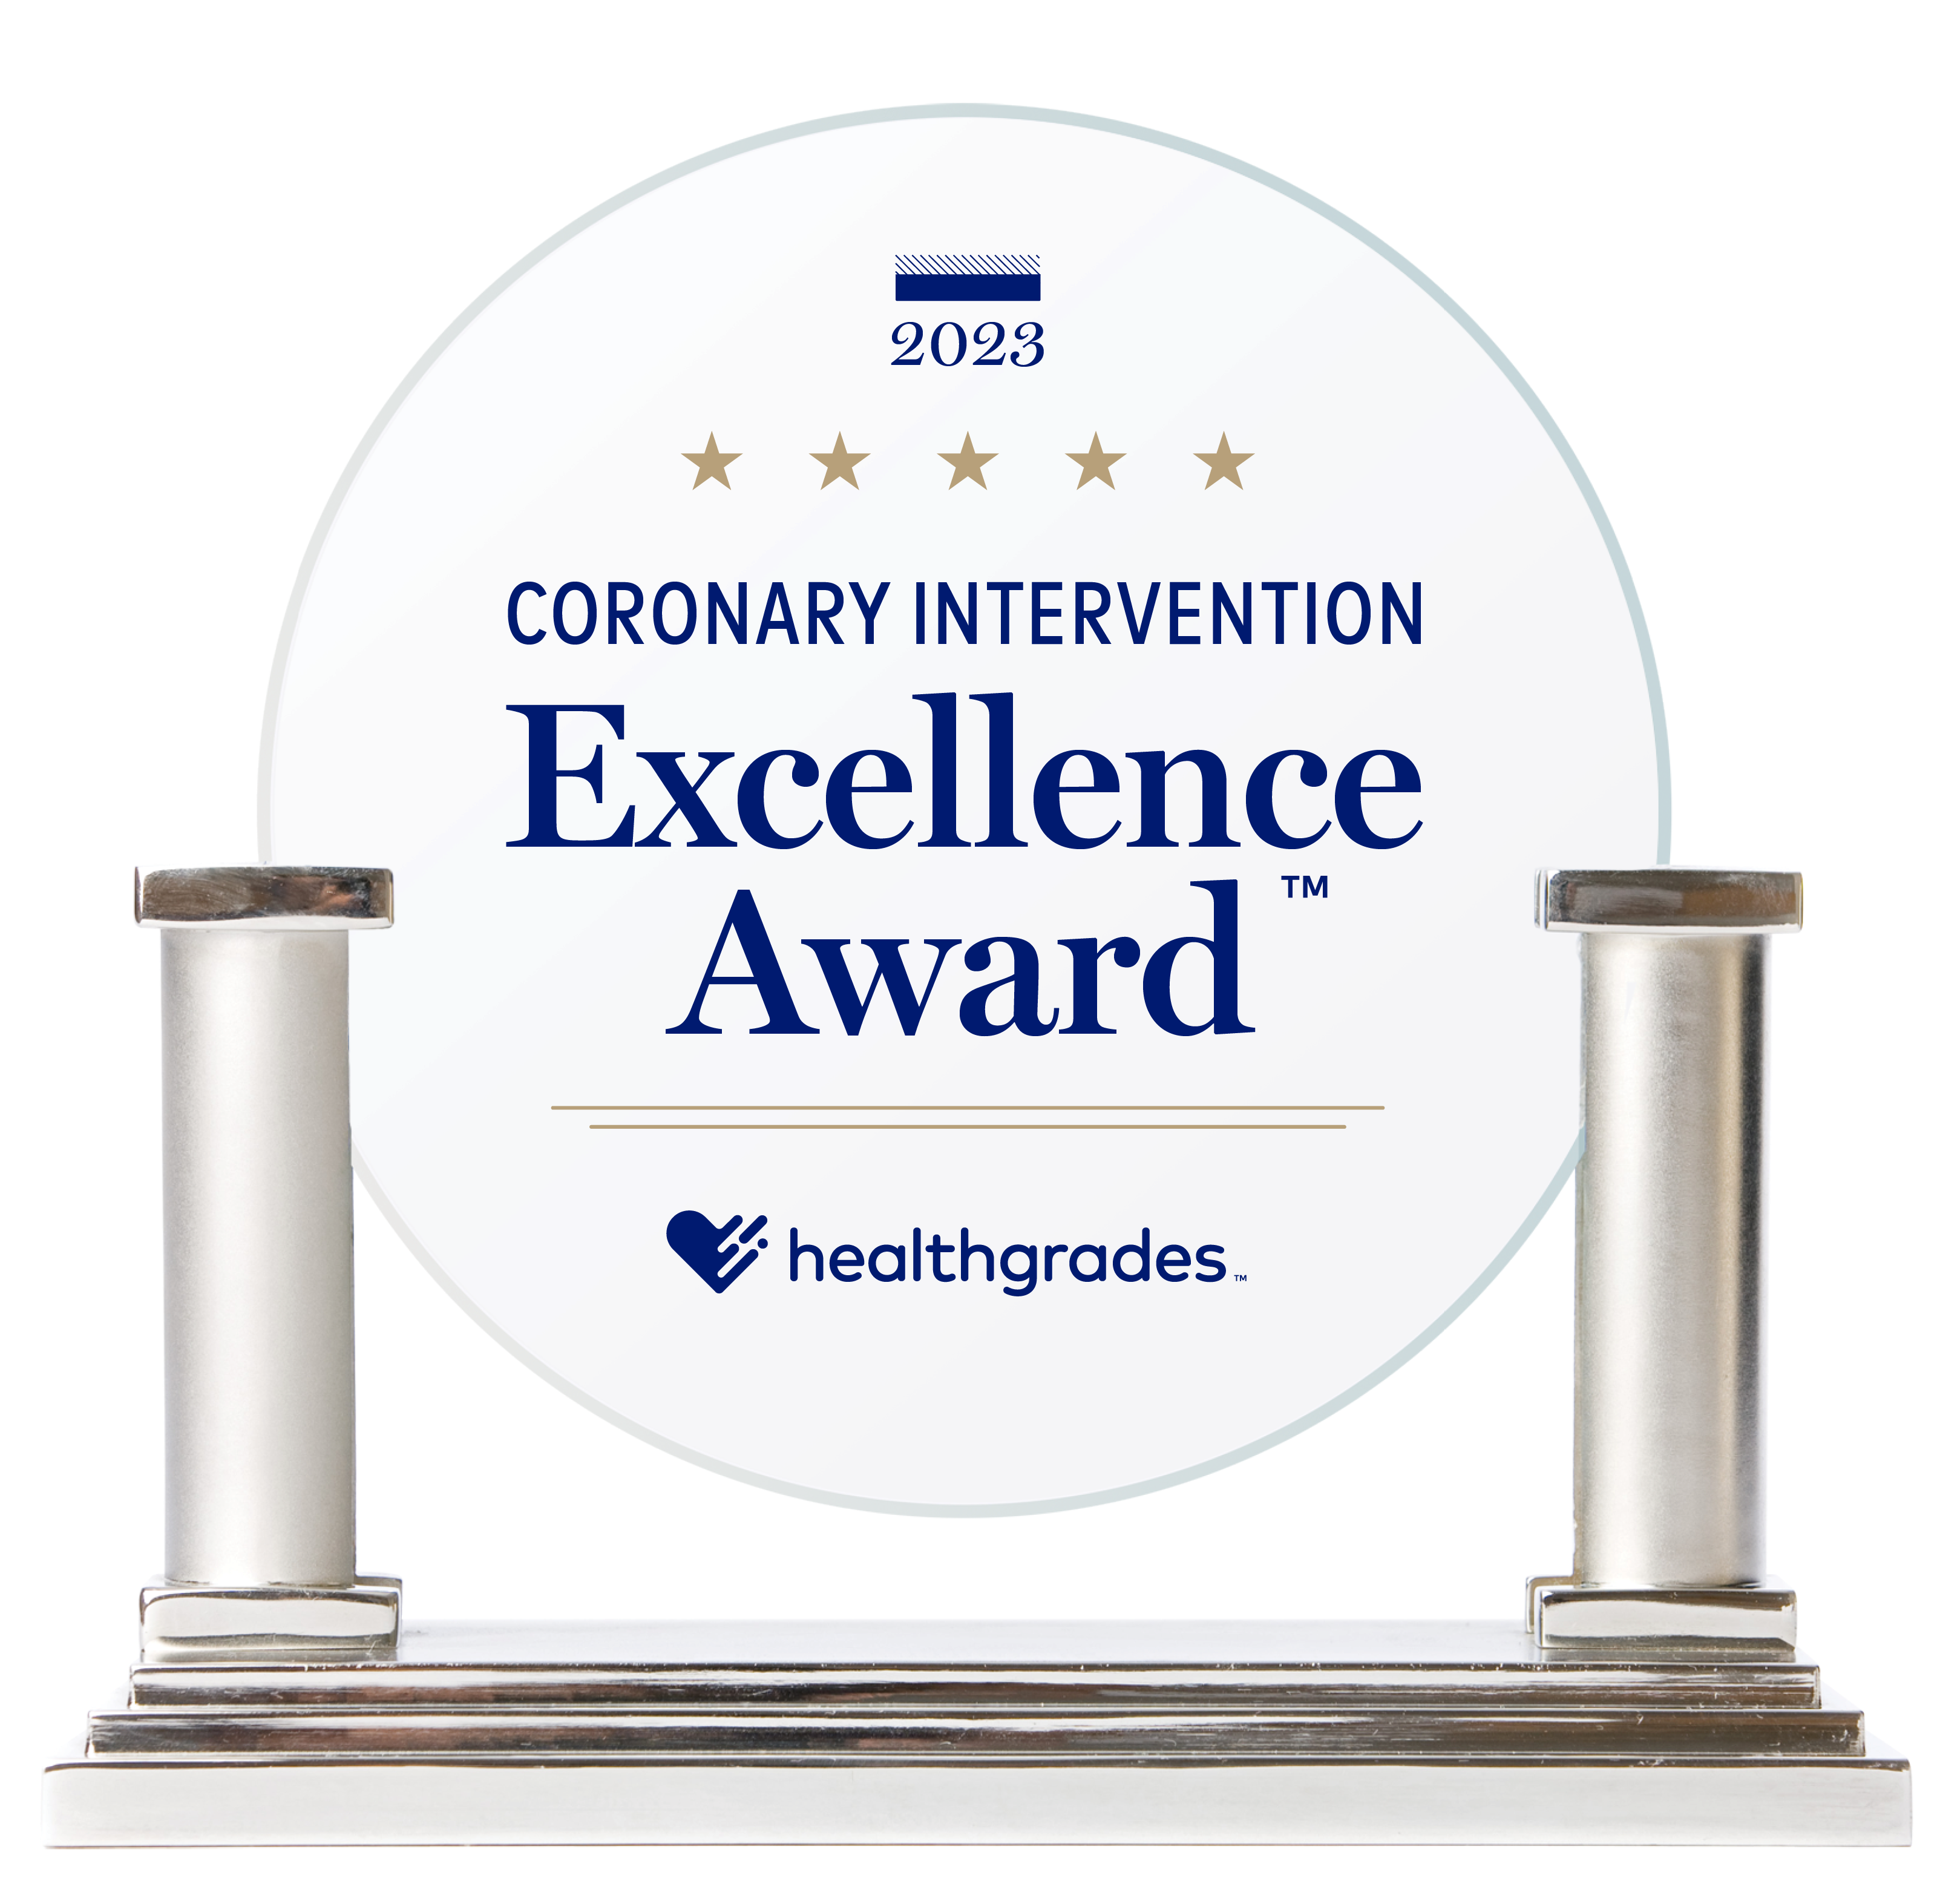 Coronary Intervention Excellence Award Healthgrades